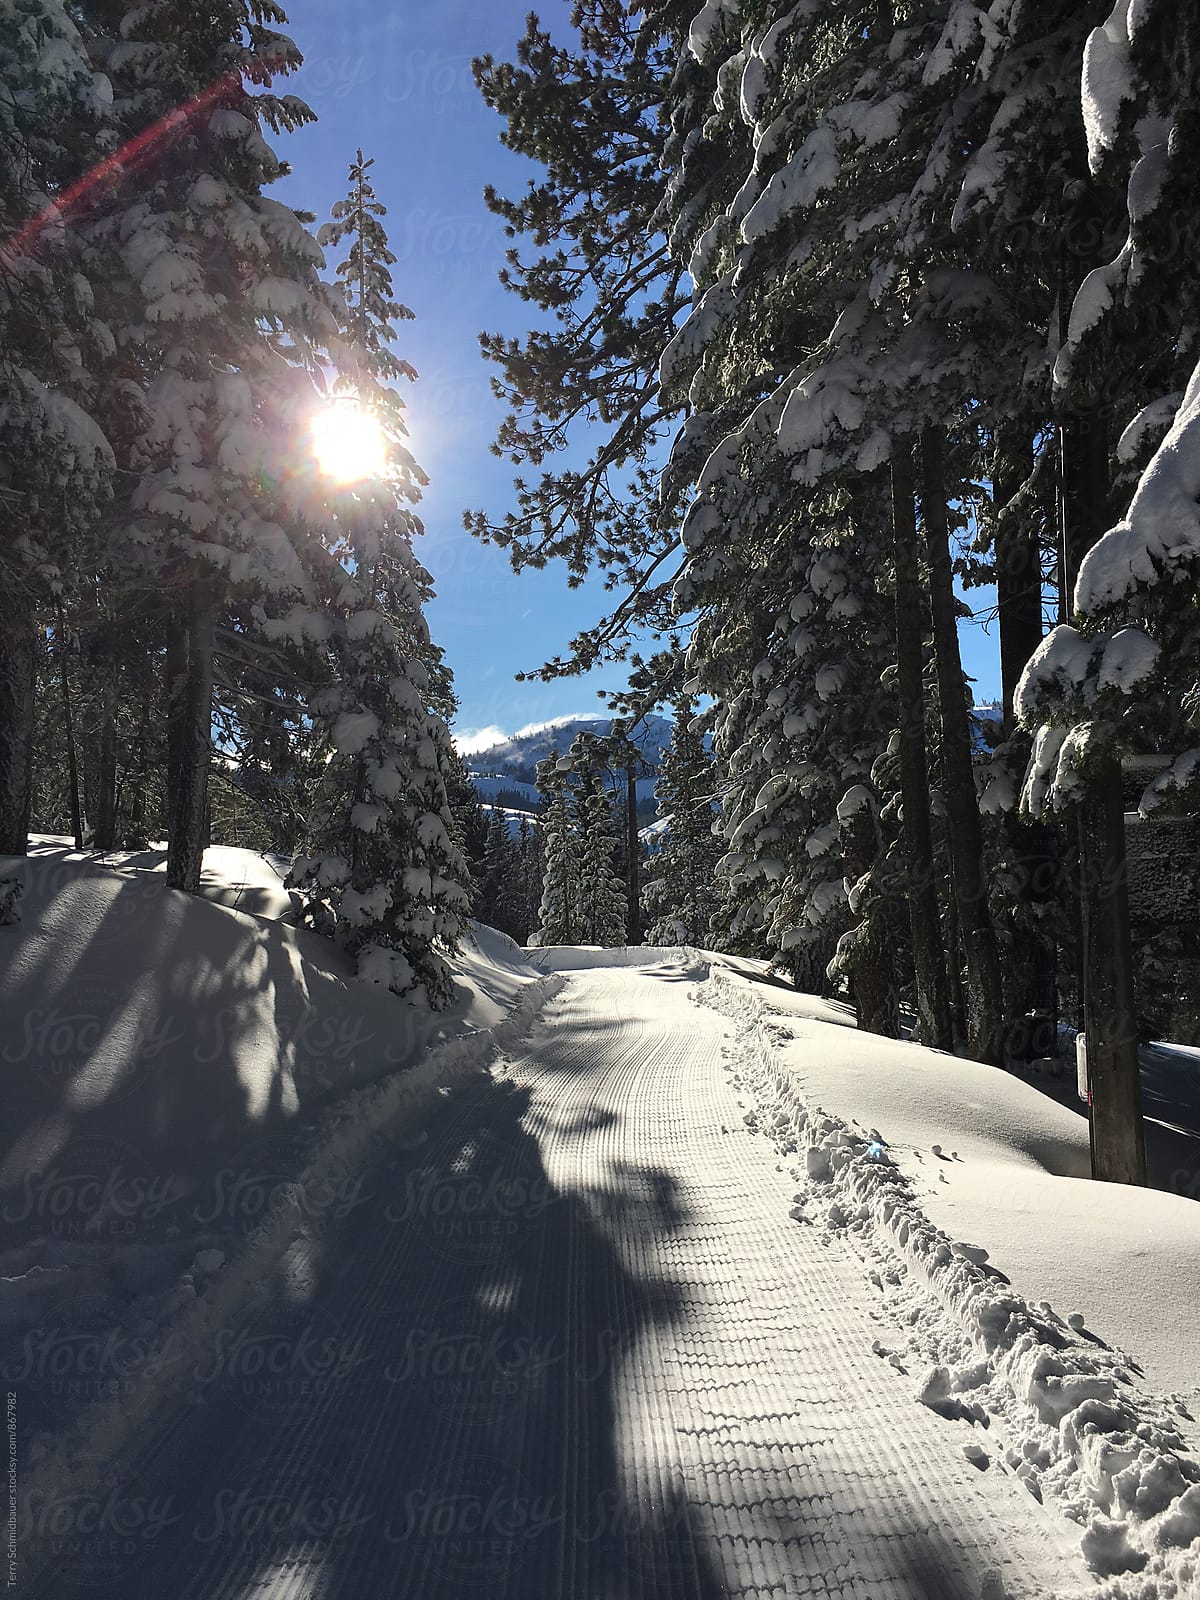 Snowed in Winter Lodge